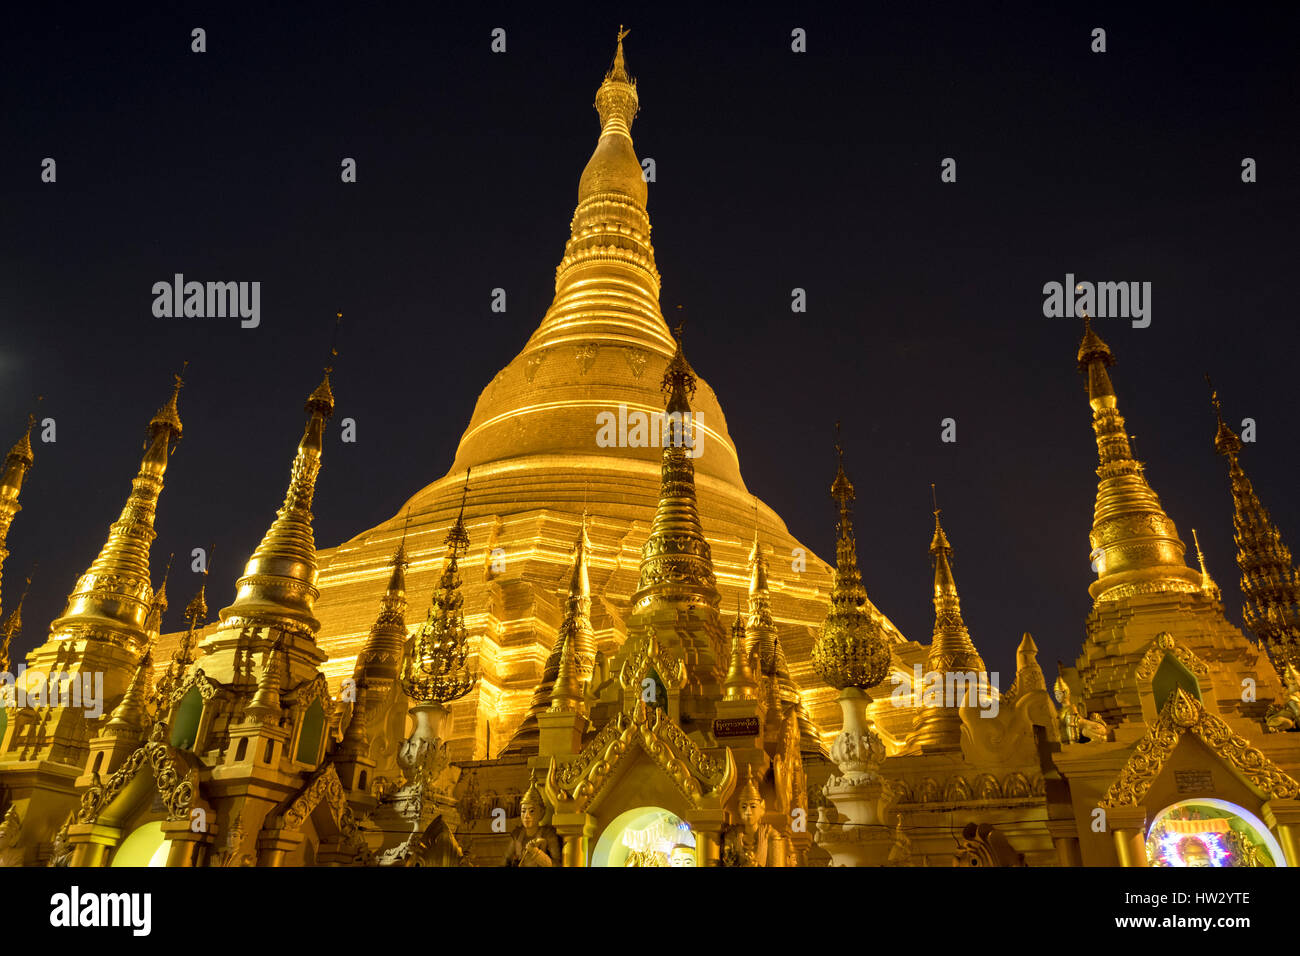 Eine Nacht Zeit Szene von der Shwedagon-Pagode in Yangon, Region Yangon, Myanmar Stockfoto